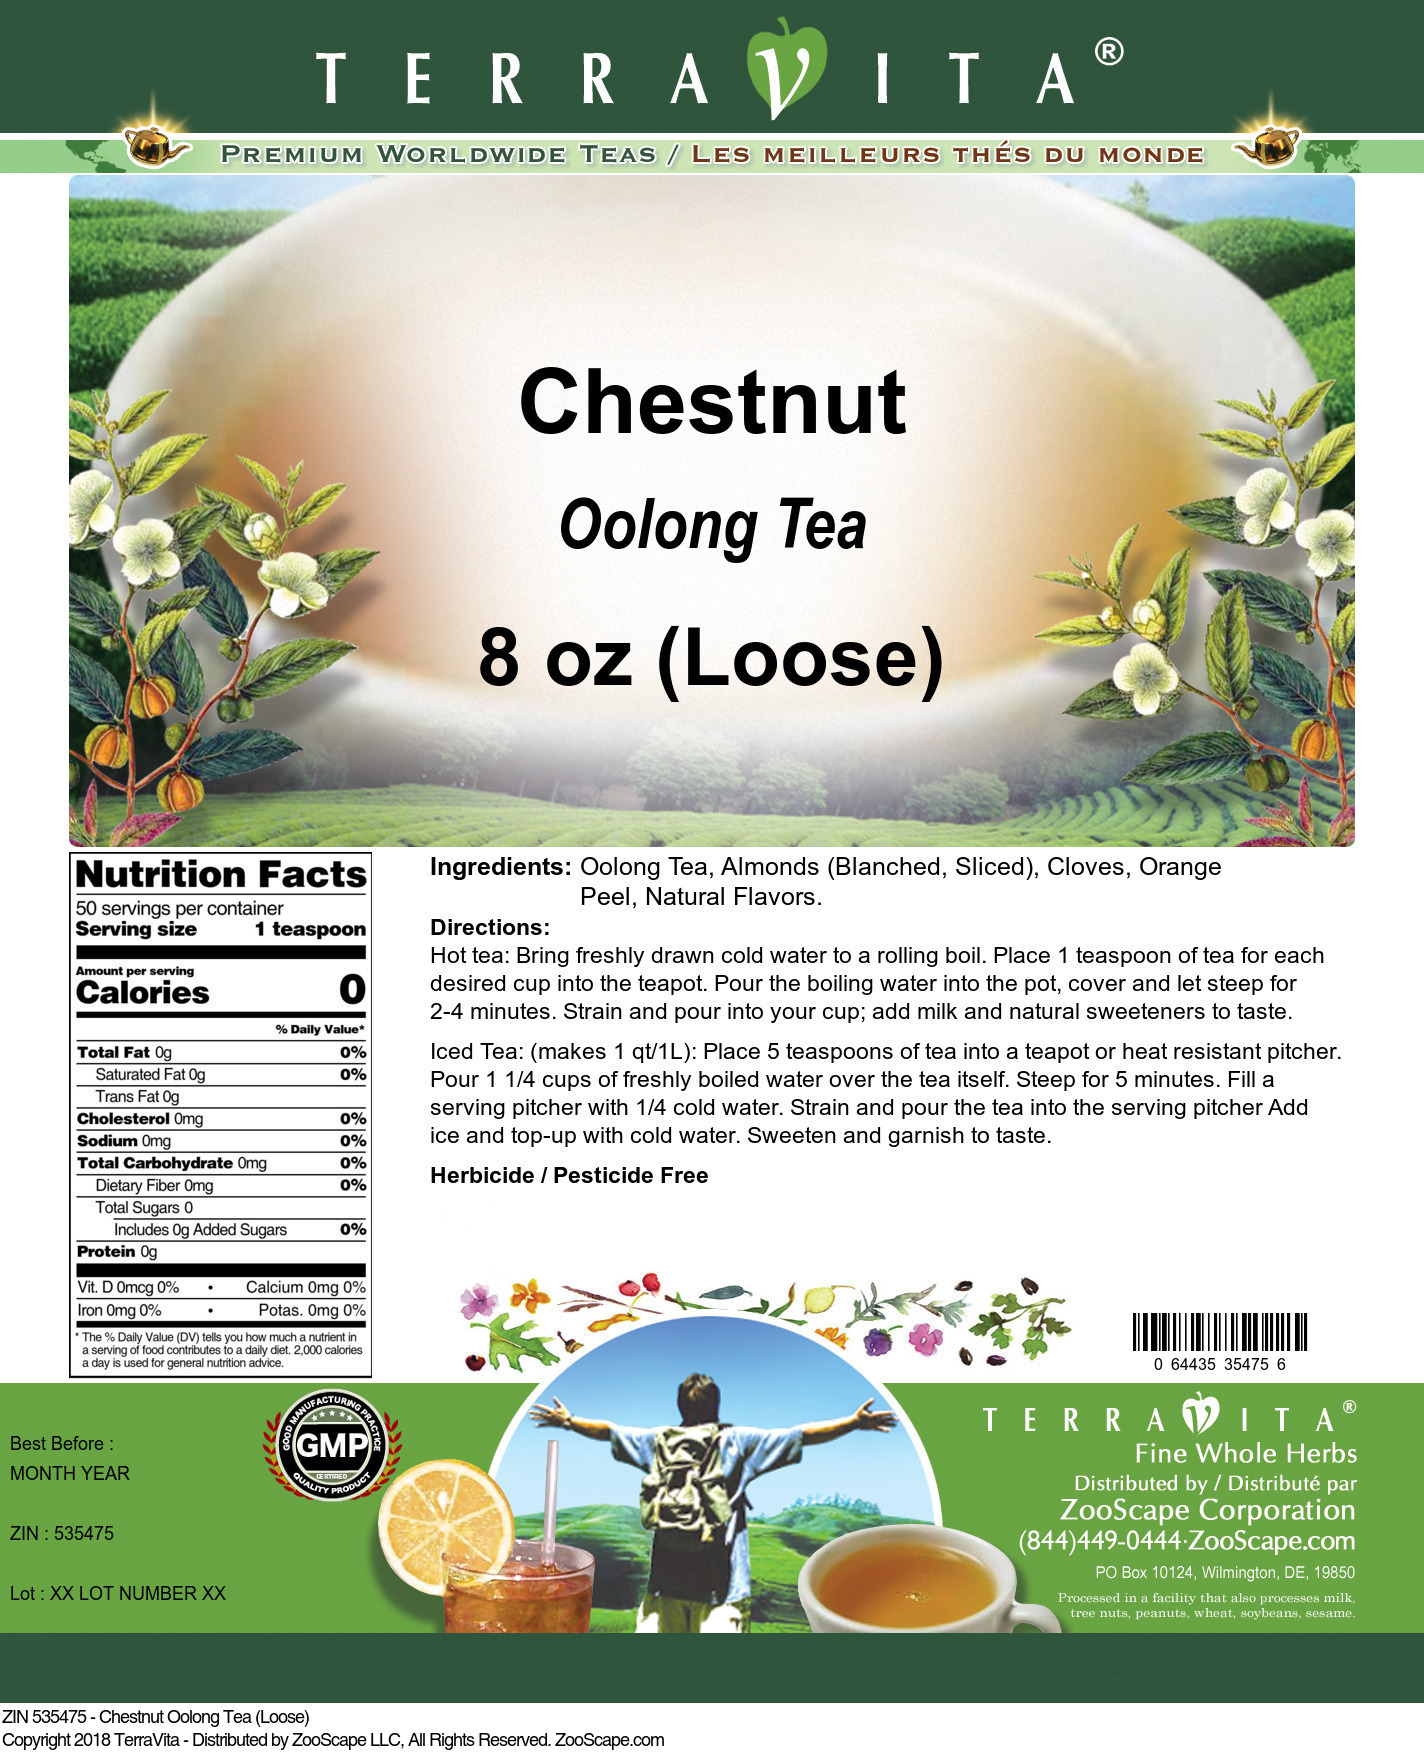 Chestnut Oolong Tea (Loose) - Label